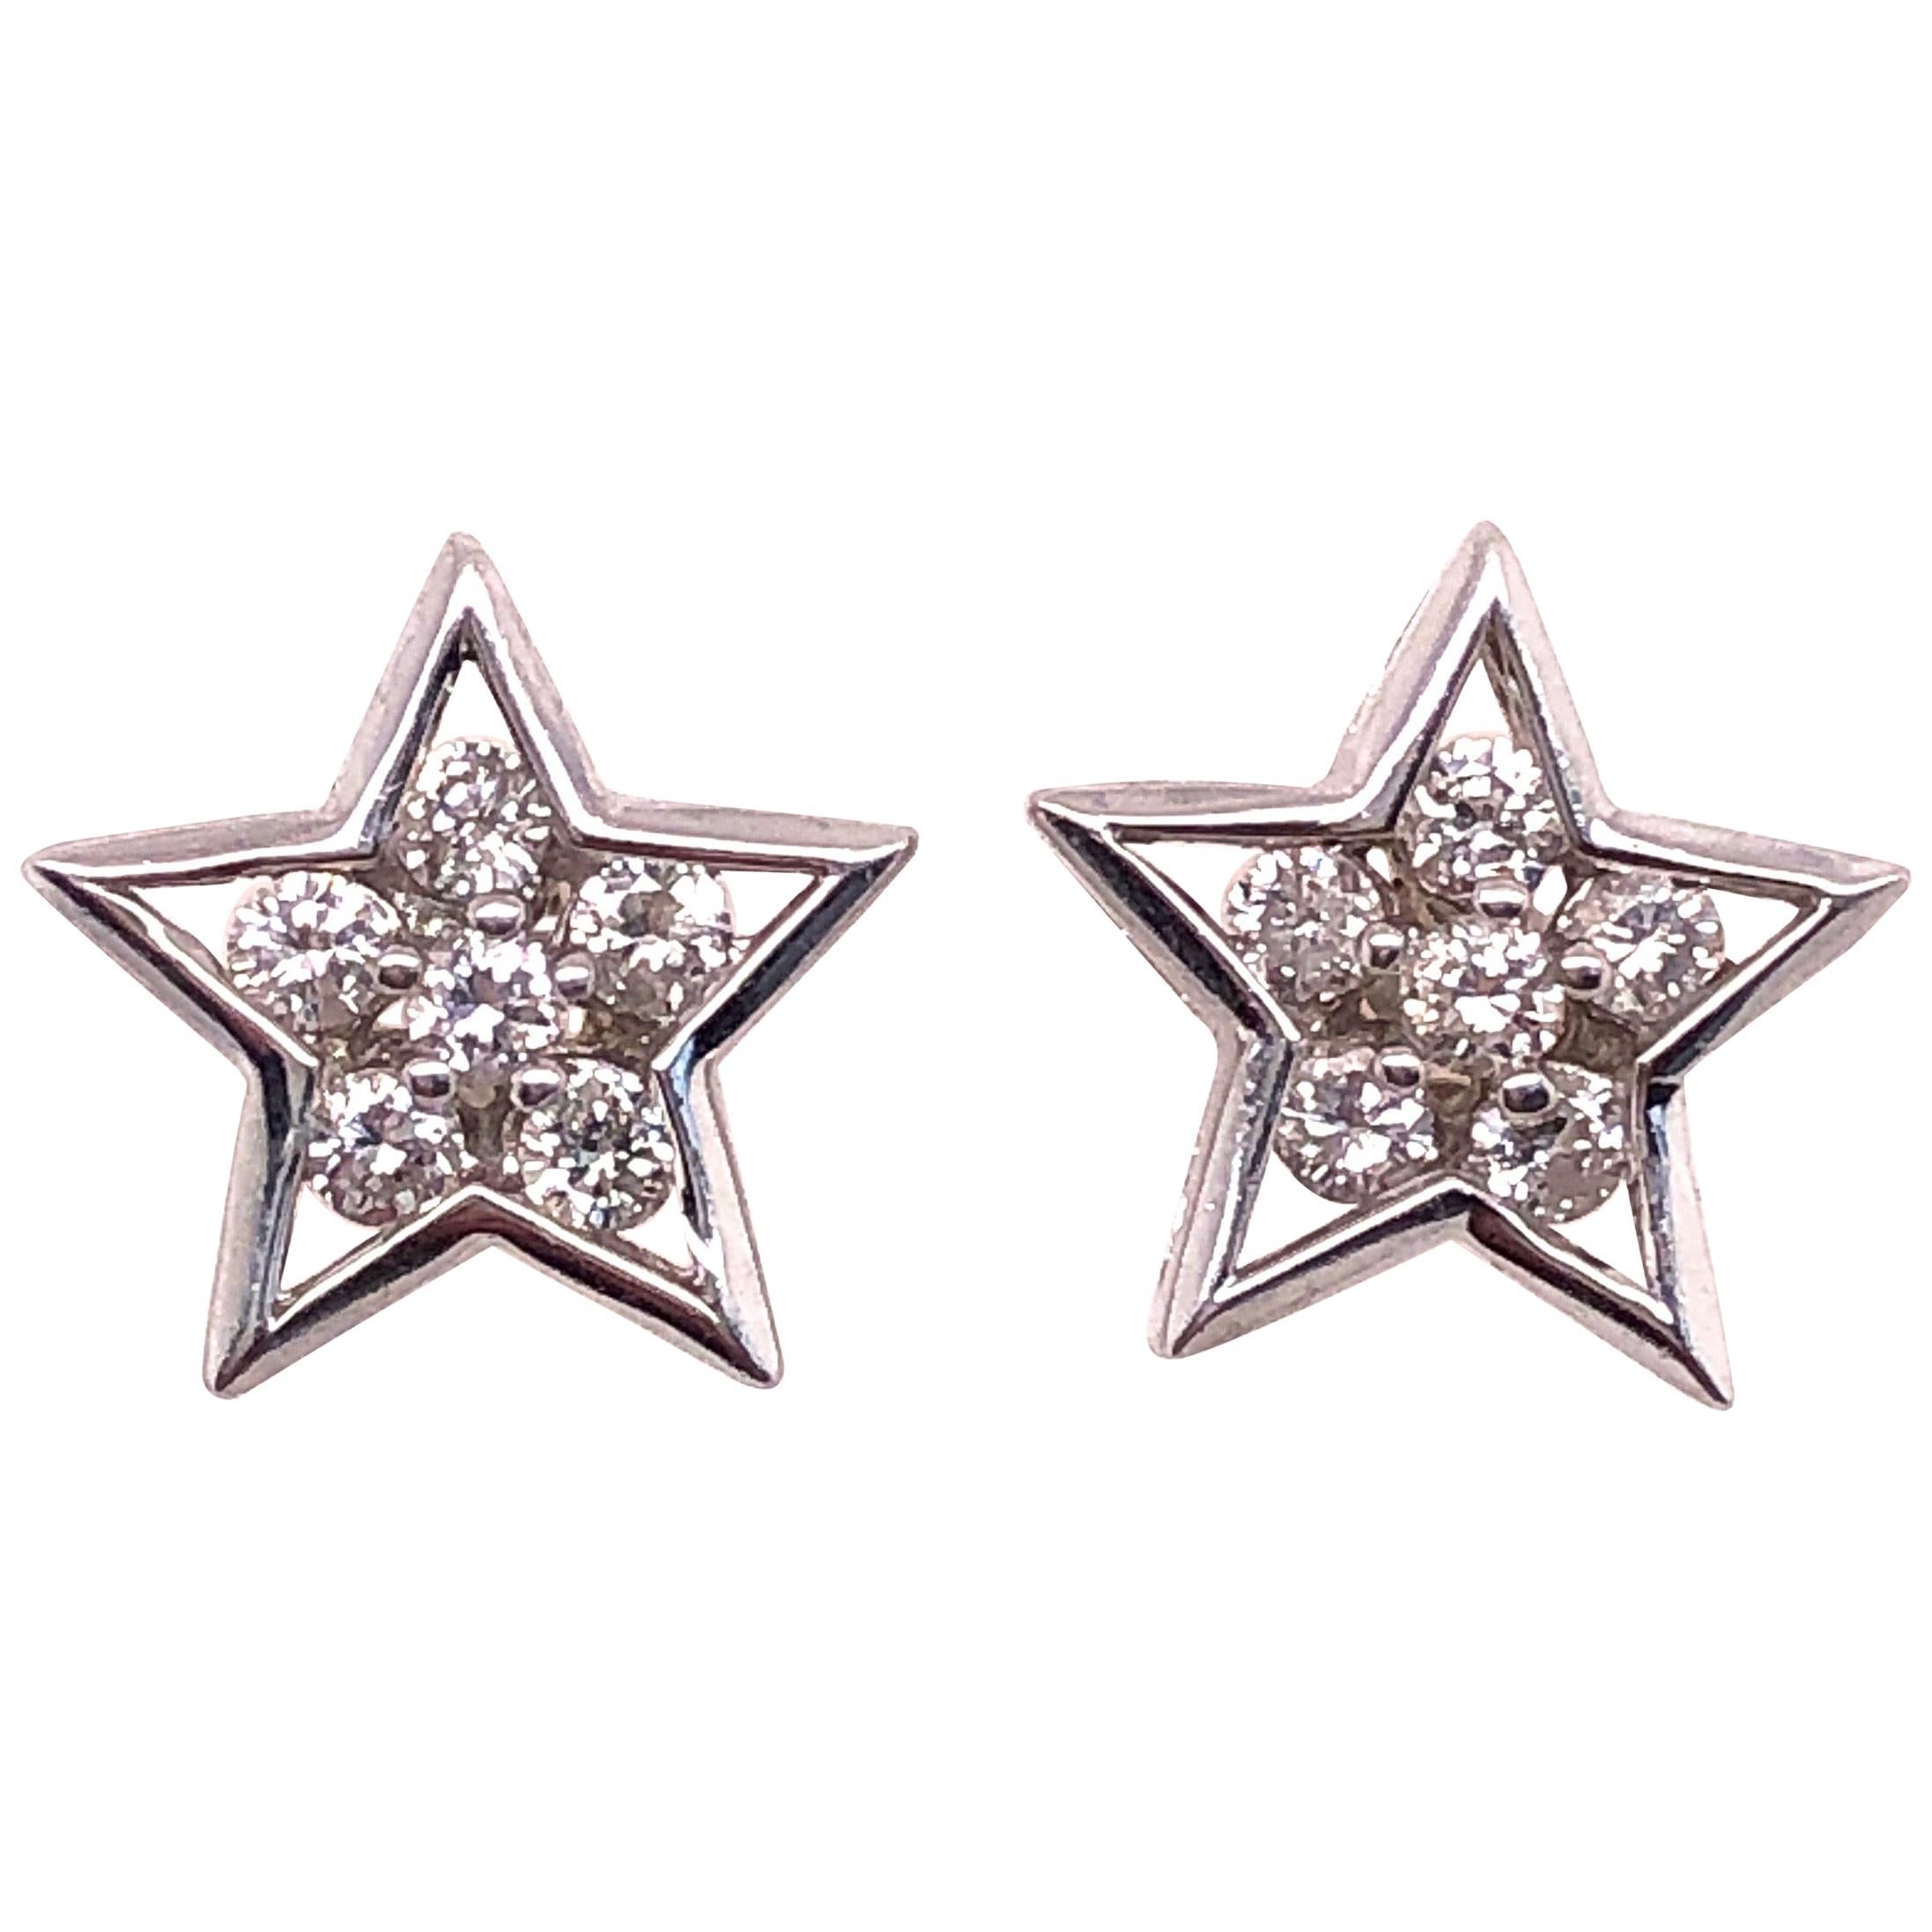 14 Karat White Gold with Diamonds Star Earrings 0.50 Total Diamond Weight